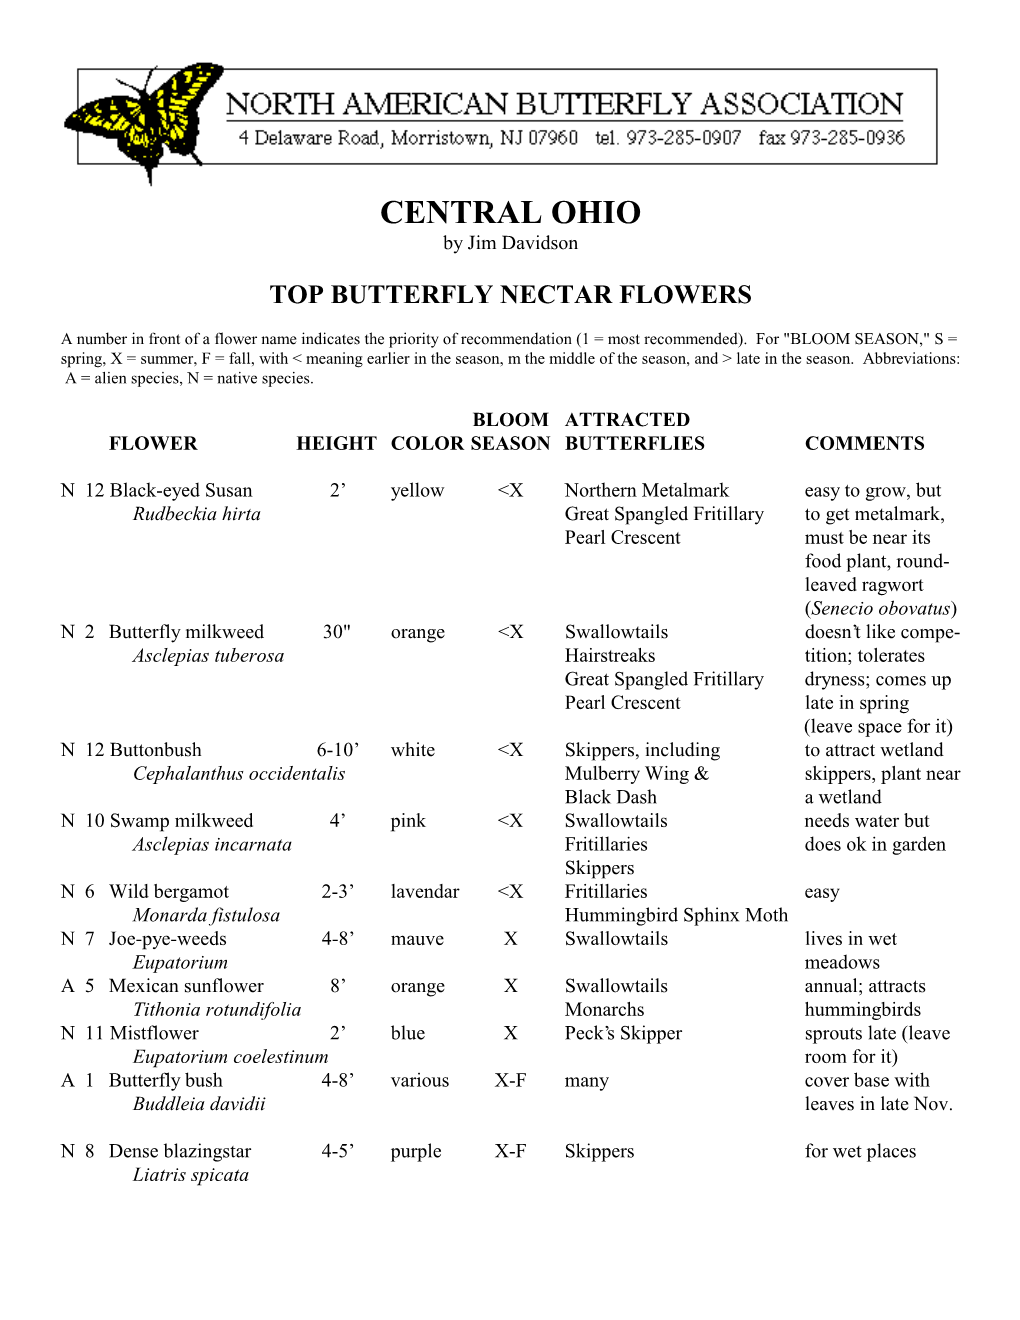 CENTRAL OHIO by Jim Davidson